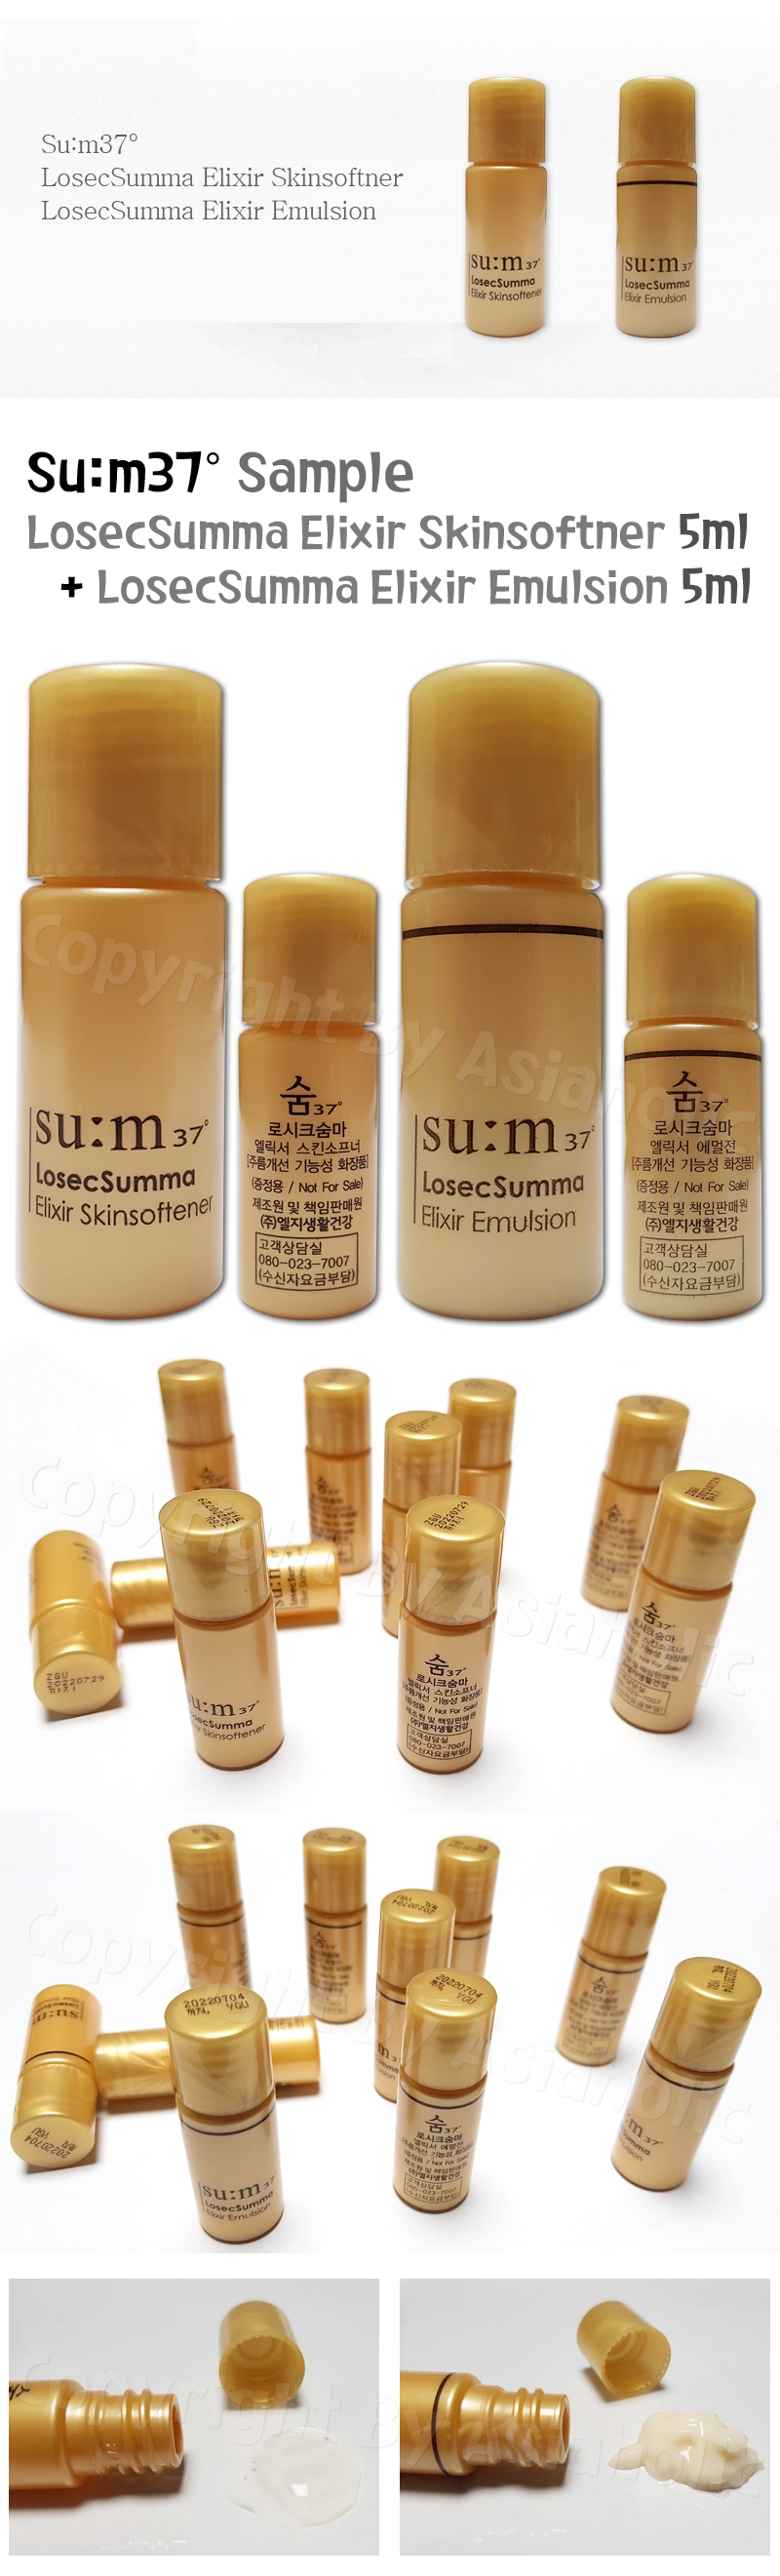 SU:M37 LosecSumma Elixir 5ml Skinsoftner (9pcs) + Emulsion (9pcs) 18pcs Sum37 Newest Version